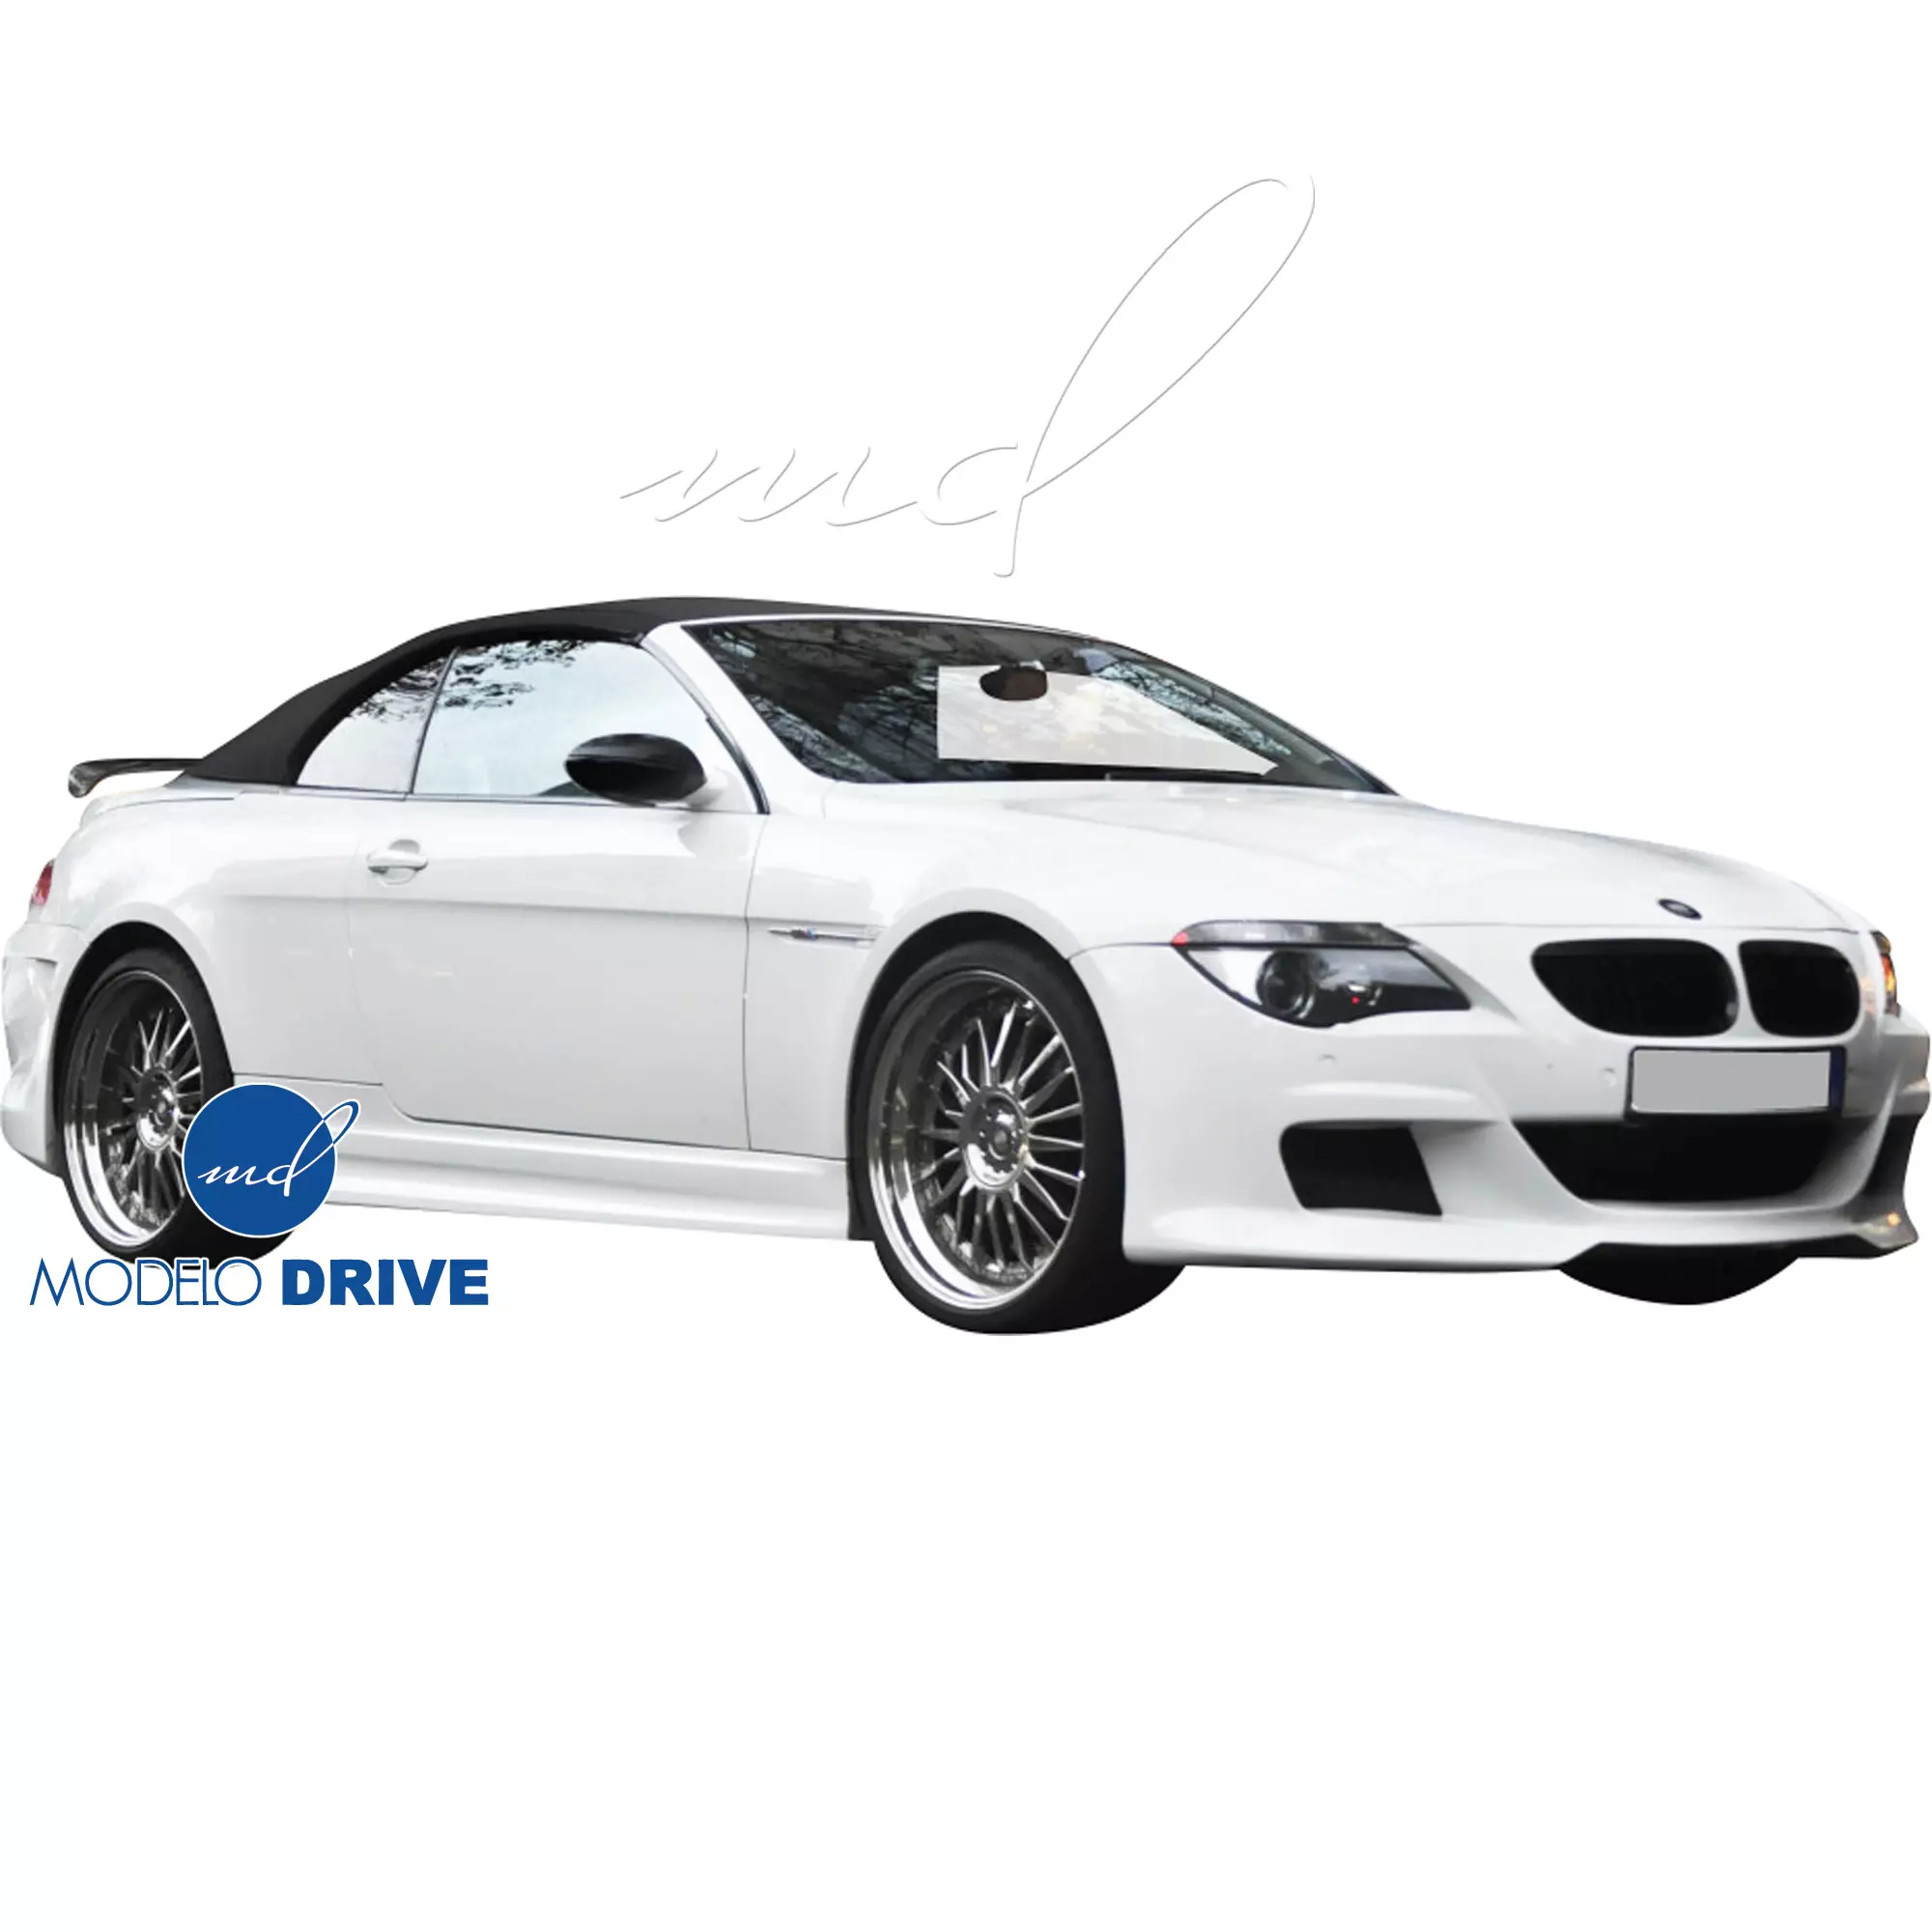 ModeloDrive FRP LDES Body Kit 4pc > BMW 6-Series E63 E64 2004-2010 > 2dr - Image 24